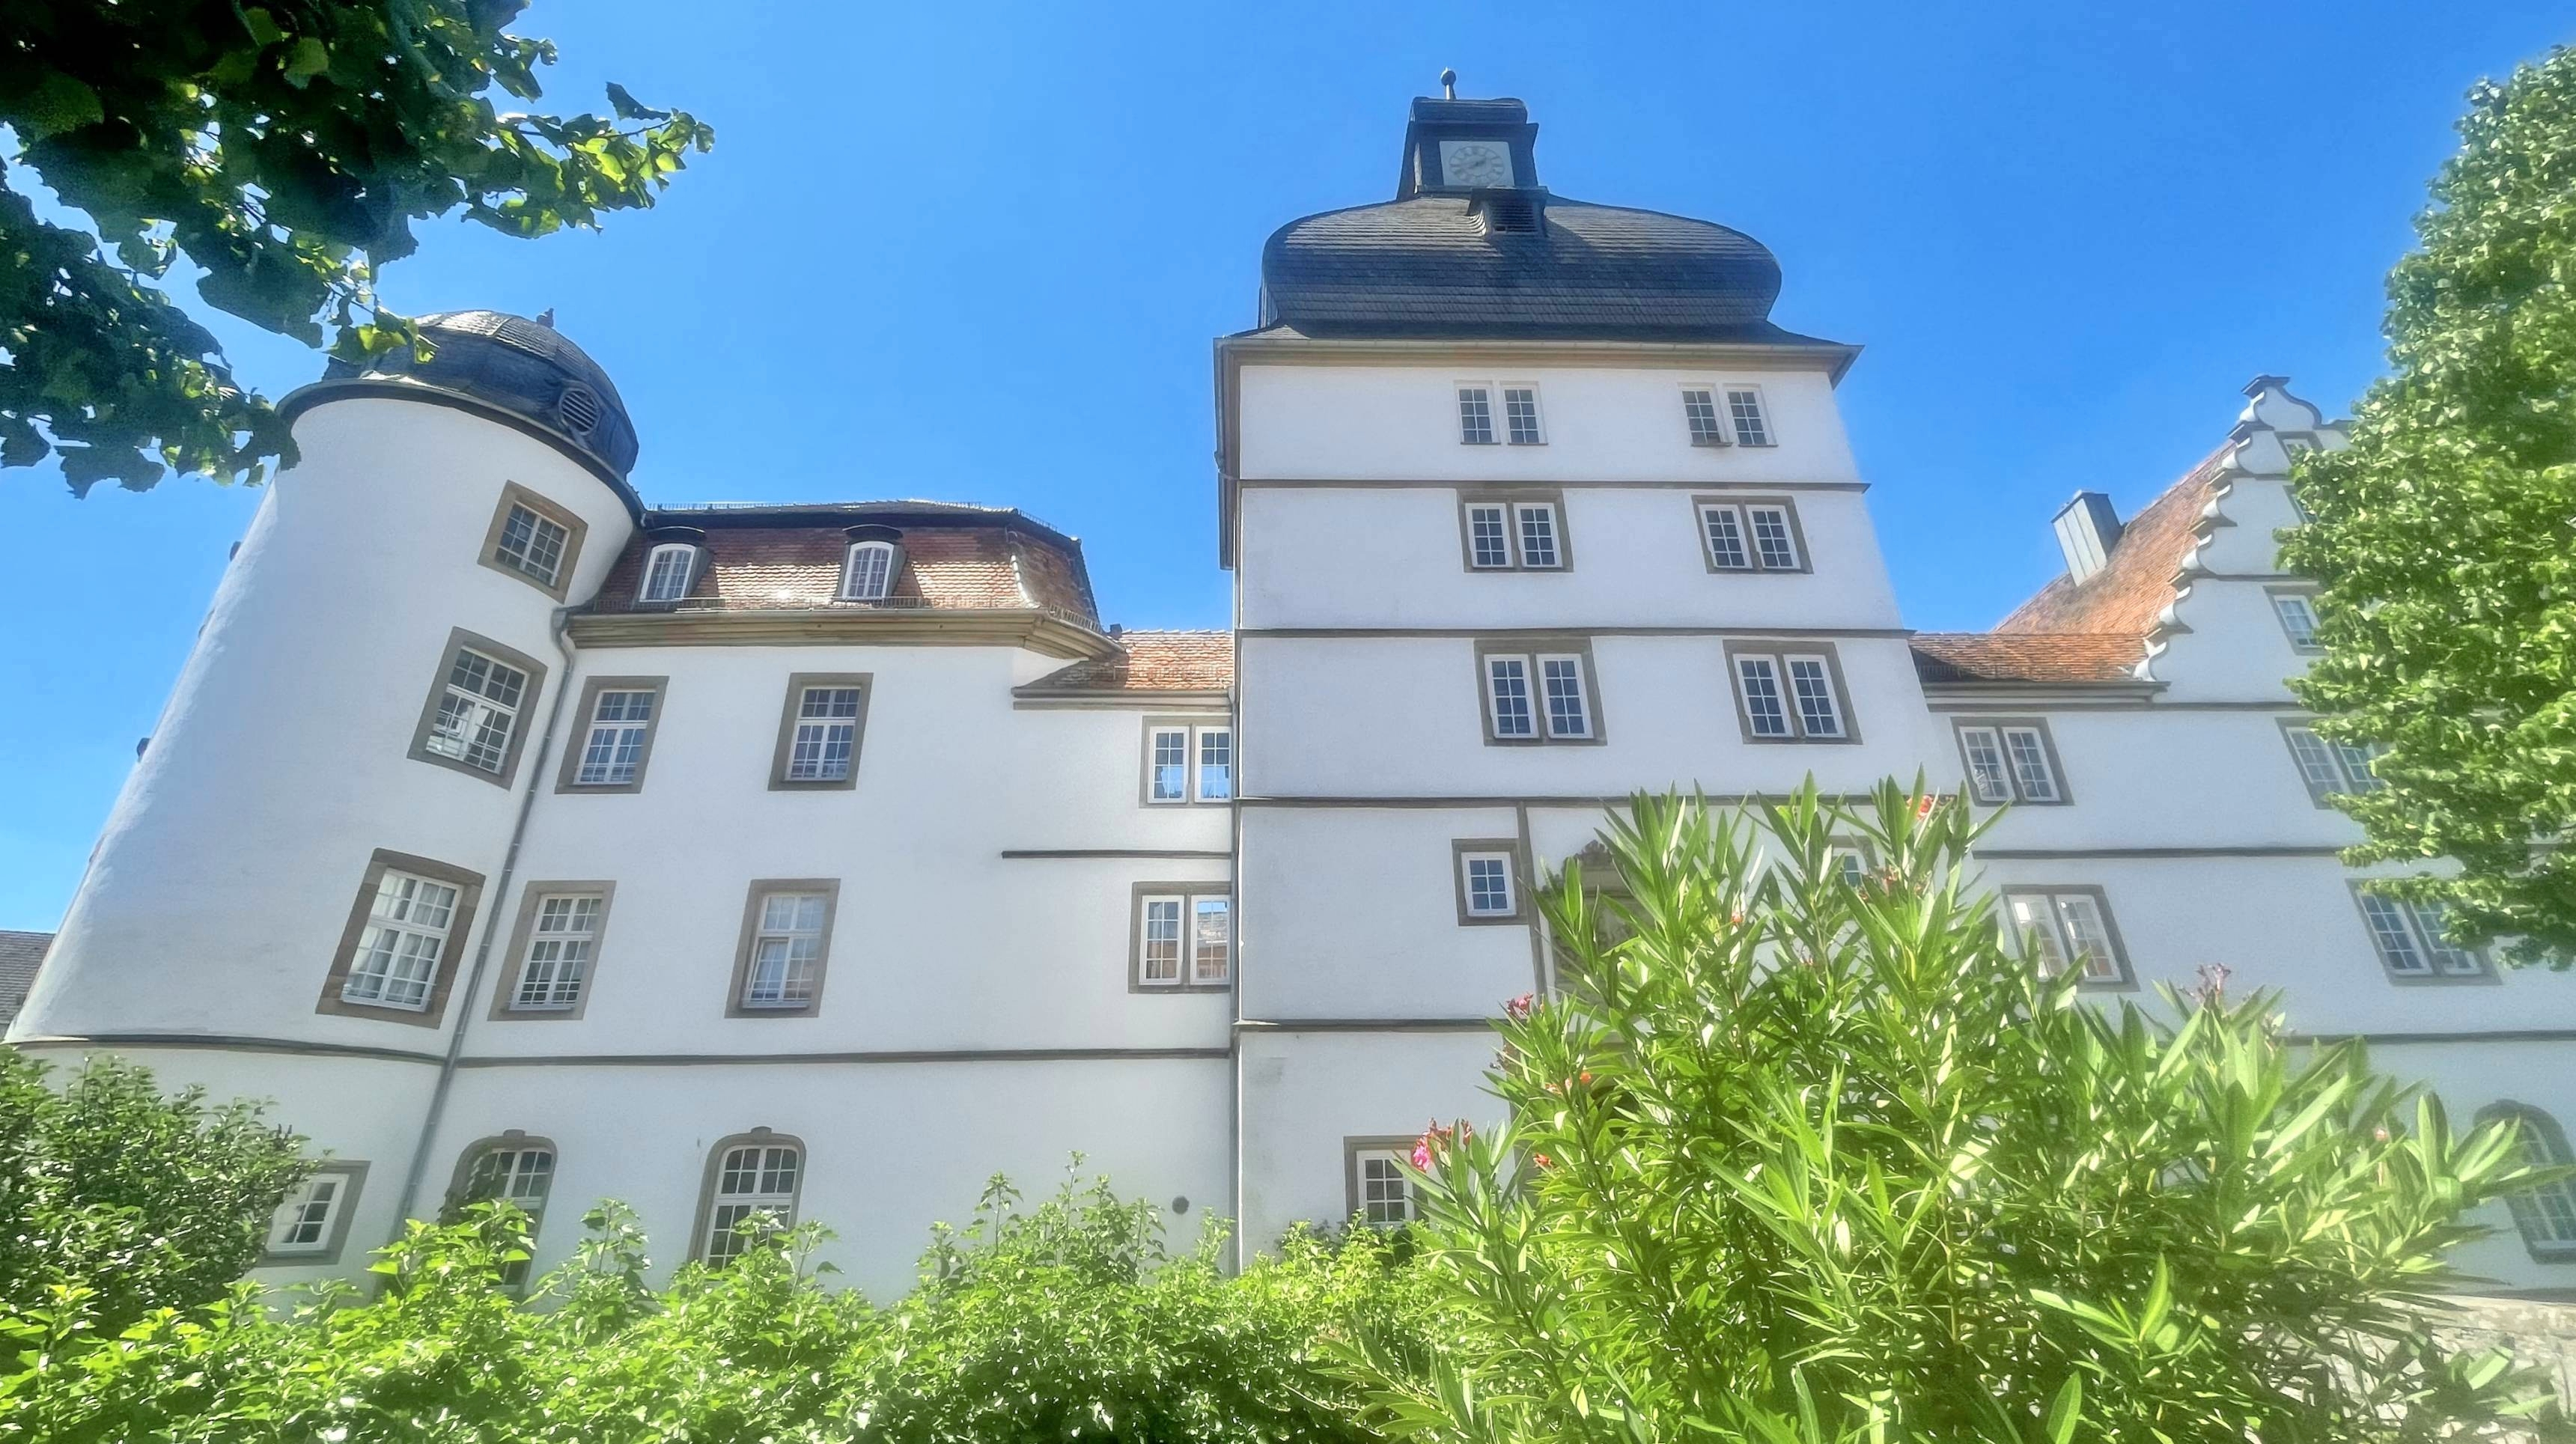 Schloss Pfedelbach beherbergt heute den BÃ¼rgersaal, die ehemalige Schlosskapelle sowie zahlreiche Wohnungen.